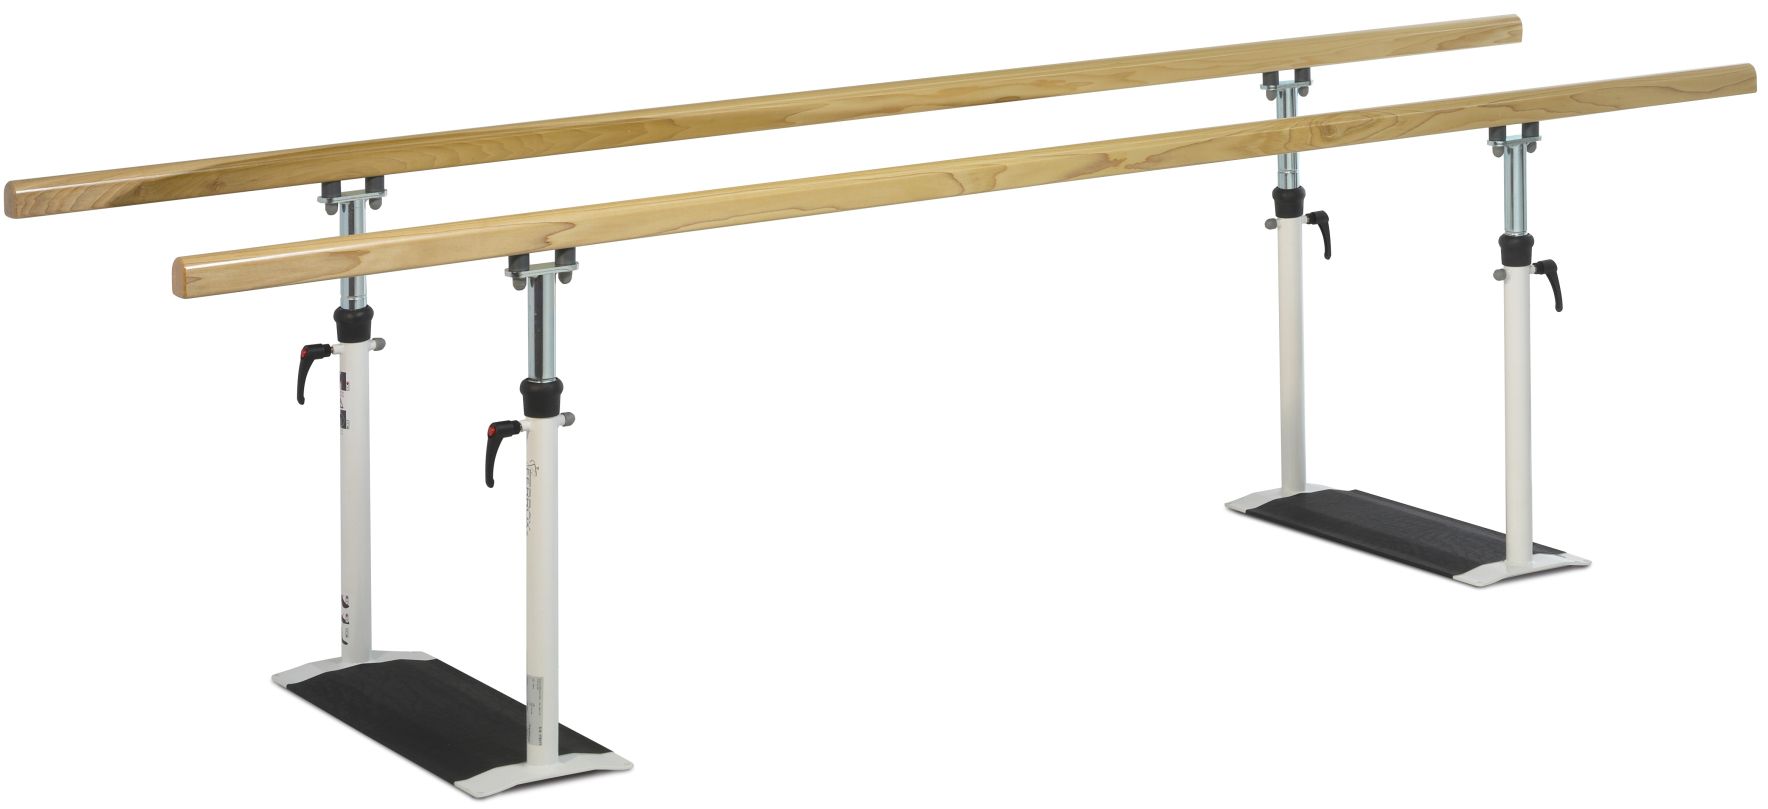 Ferrox® Walking Bars with Wooden Handrail, Foldable